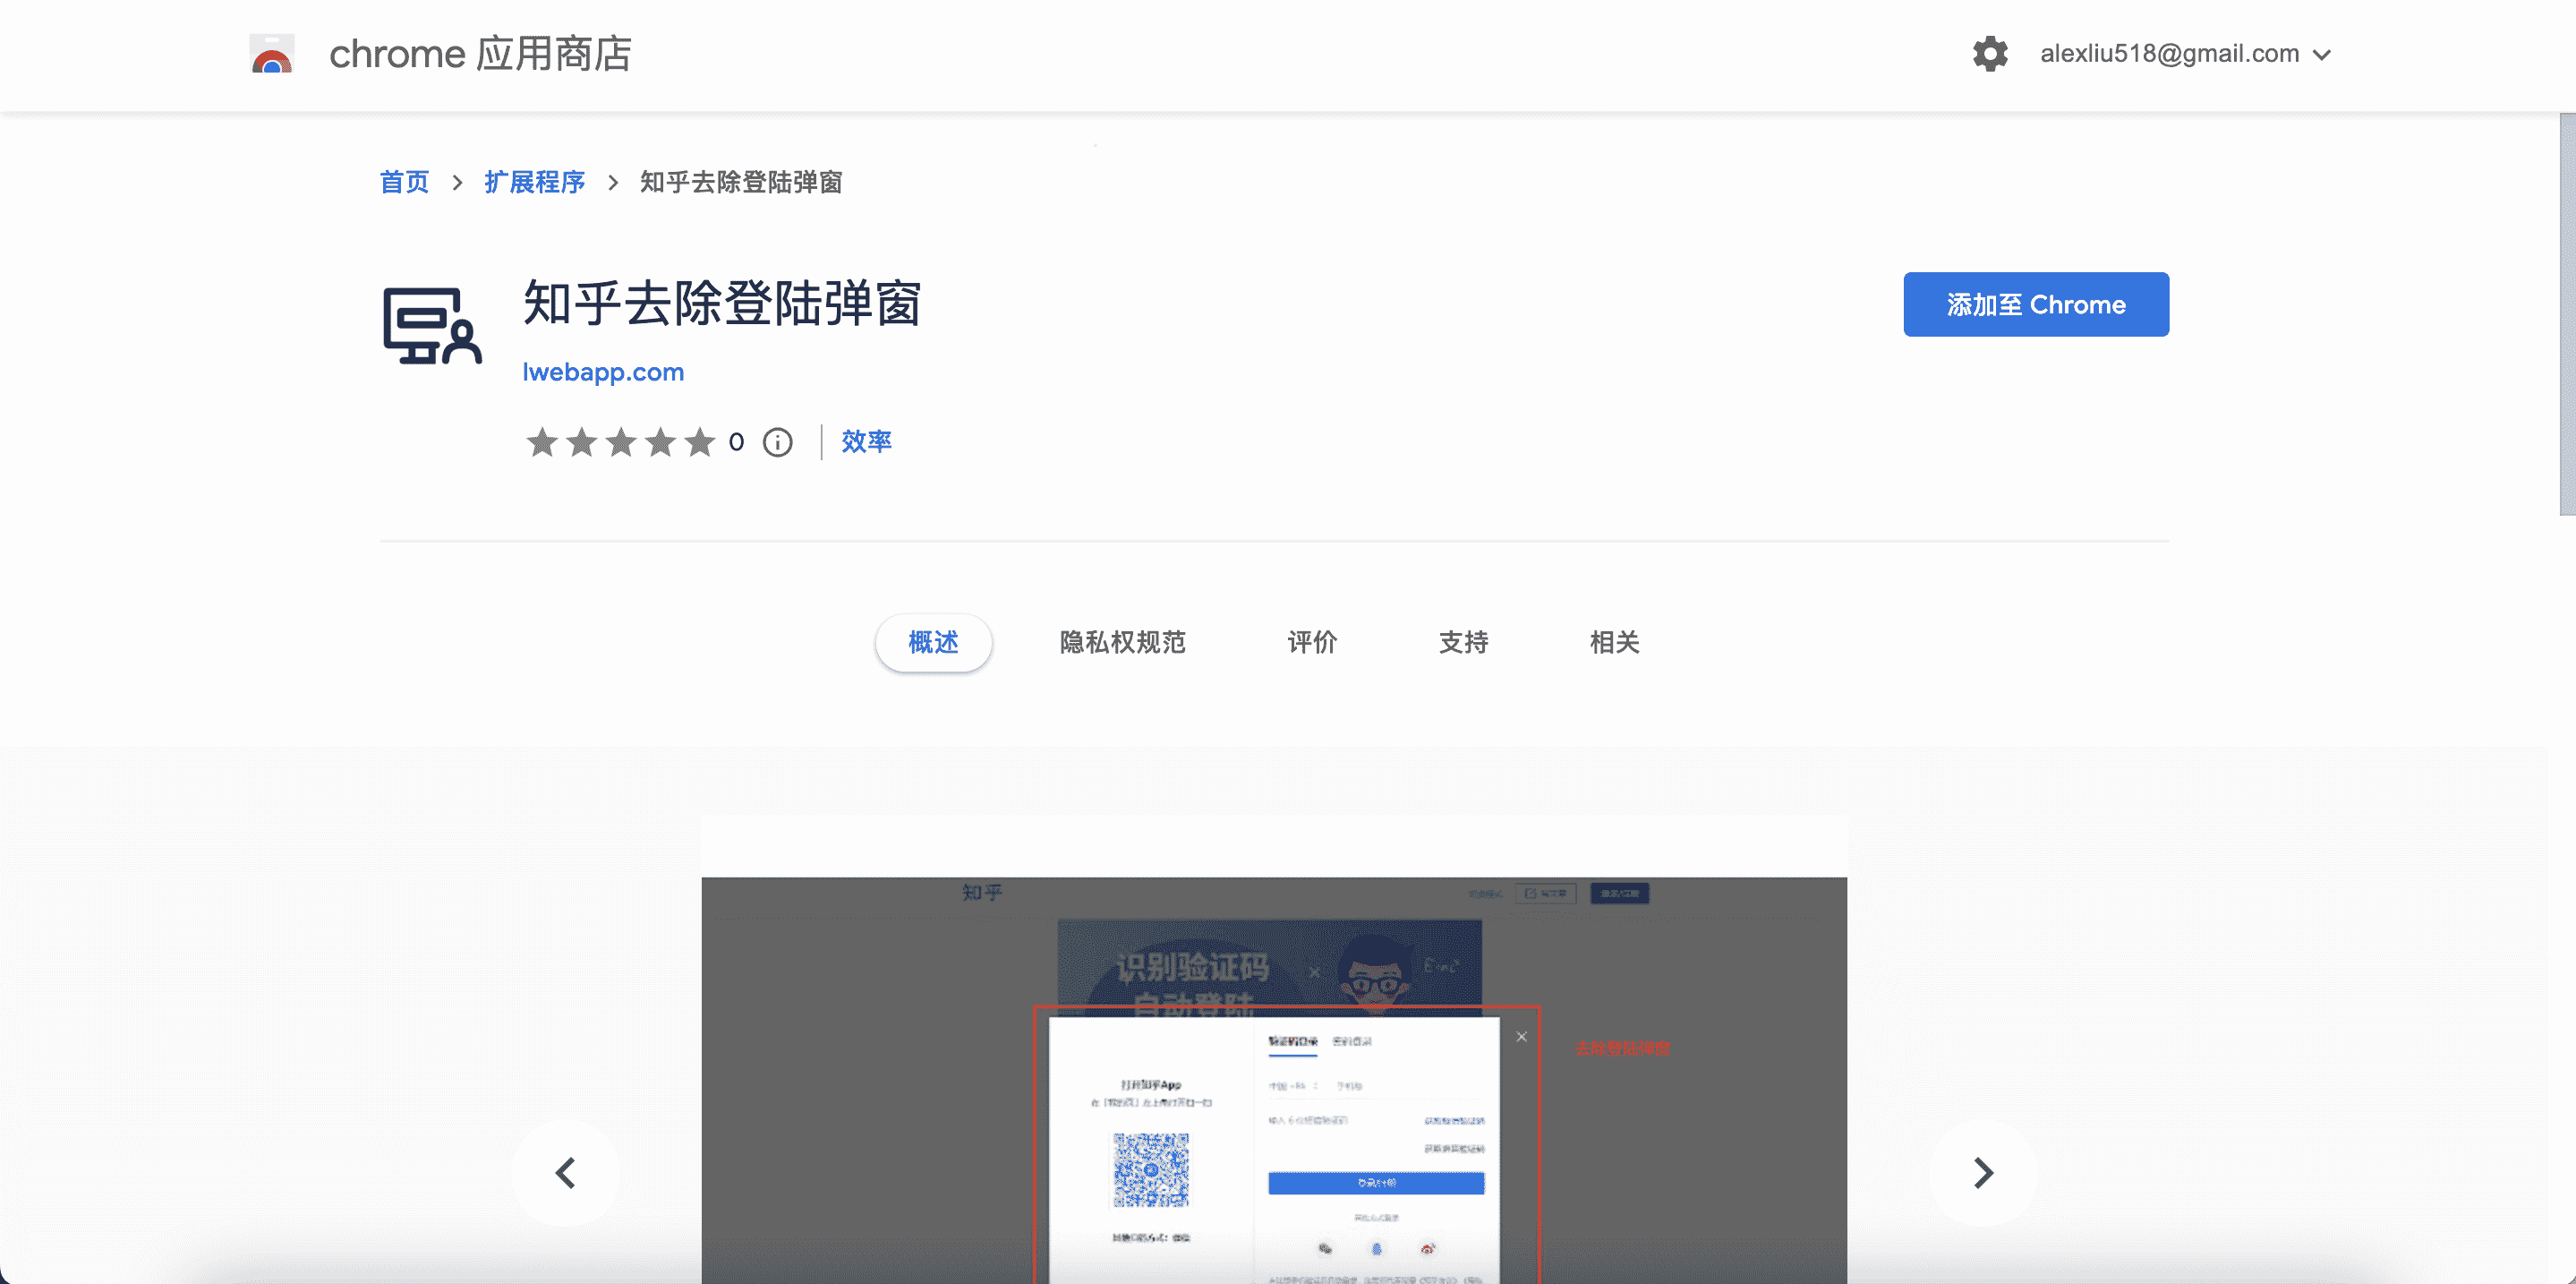 Chrome Web Store Zhihu removes the login pop-up window